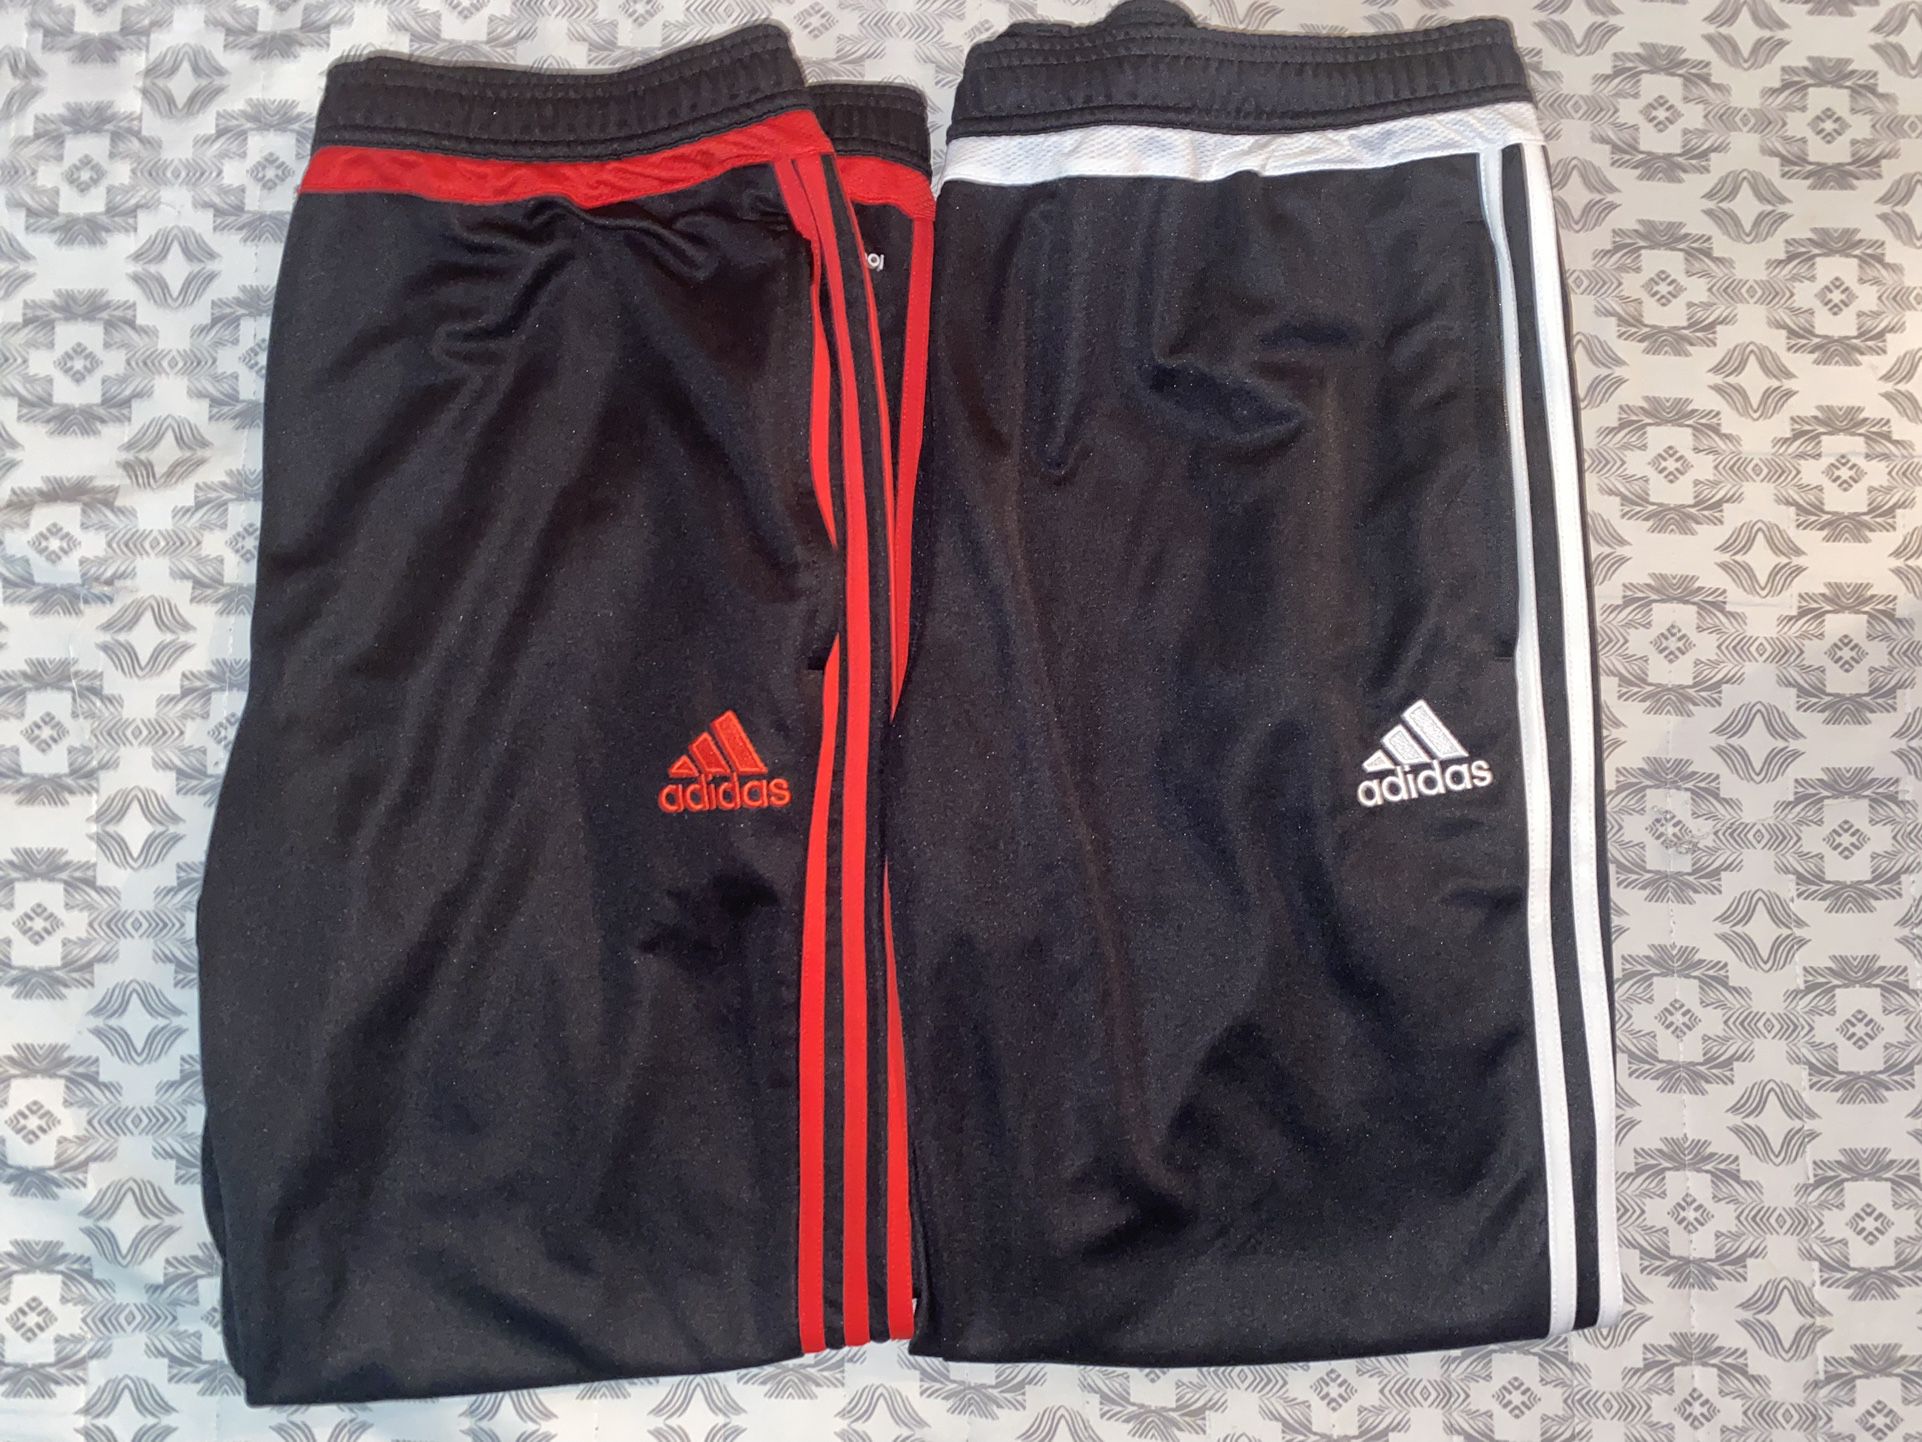 Adidas Tiro Soccer Pants